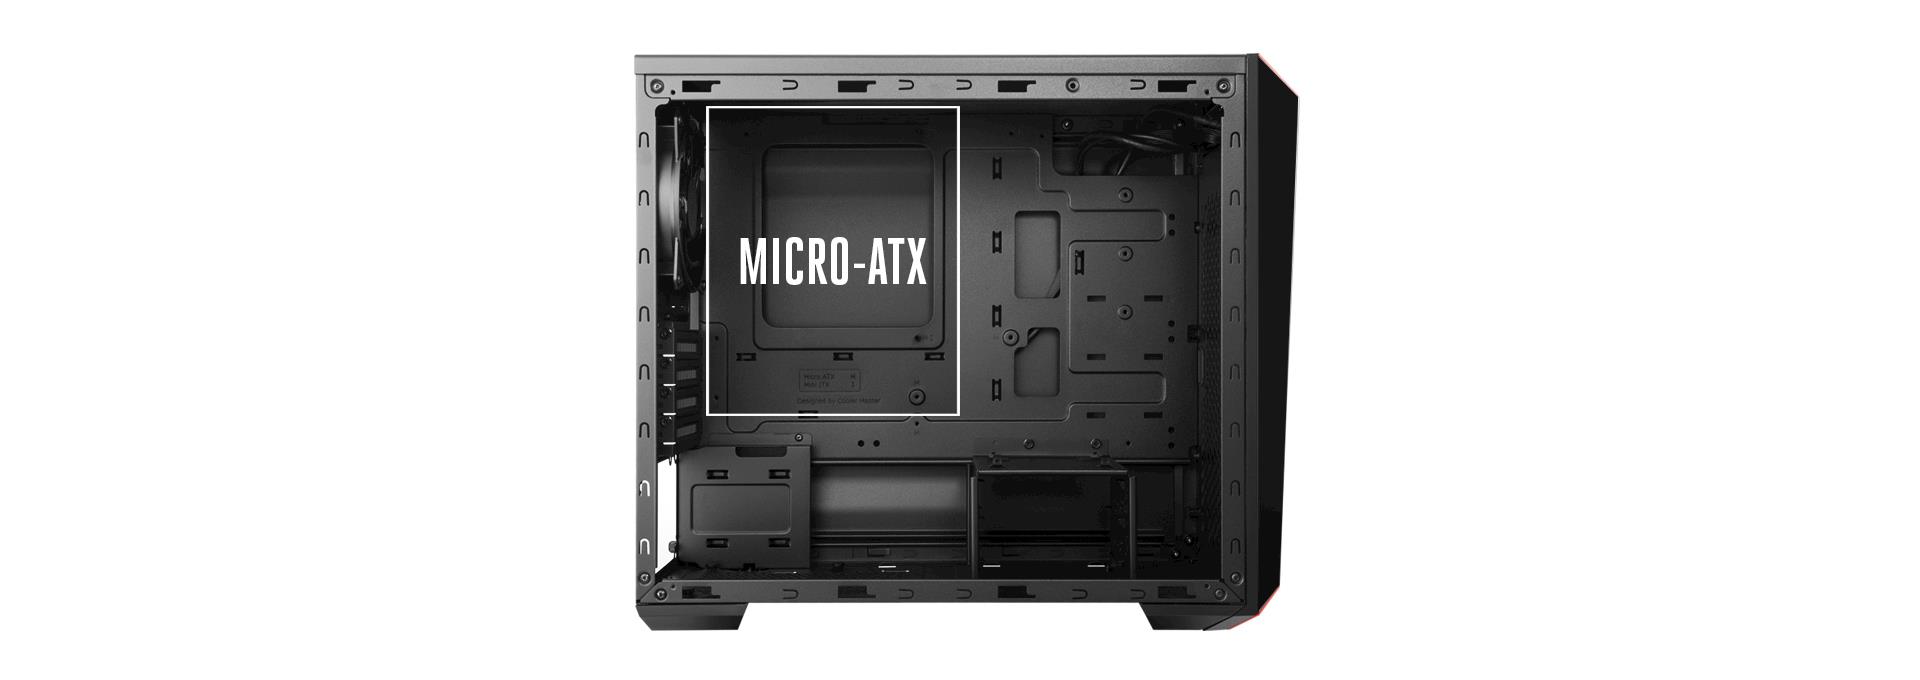 Micro-ATX